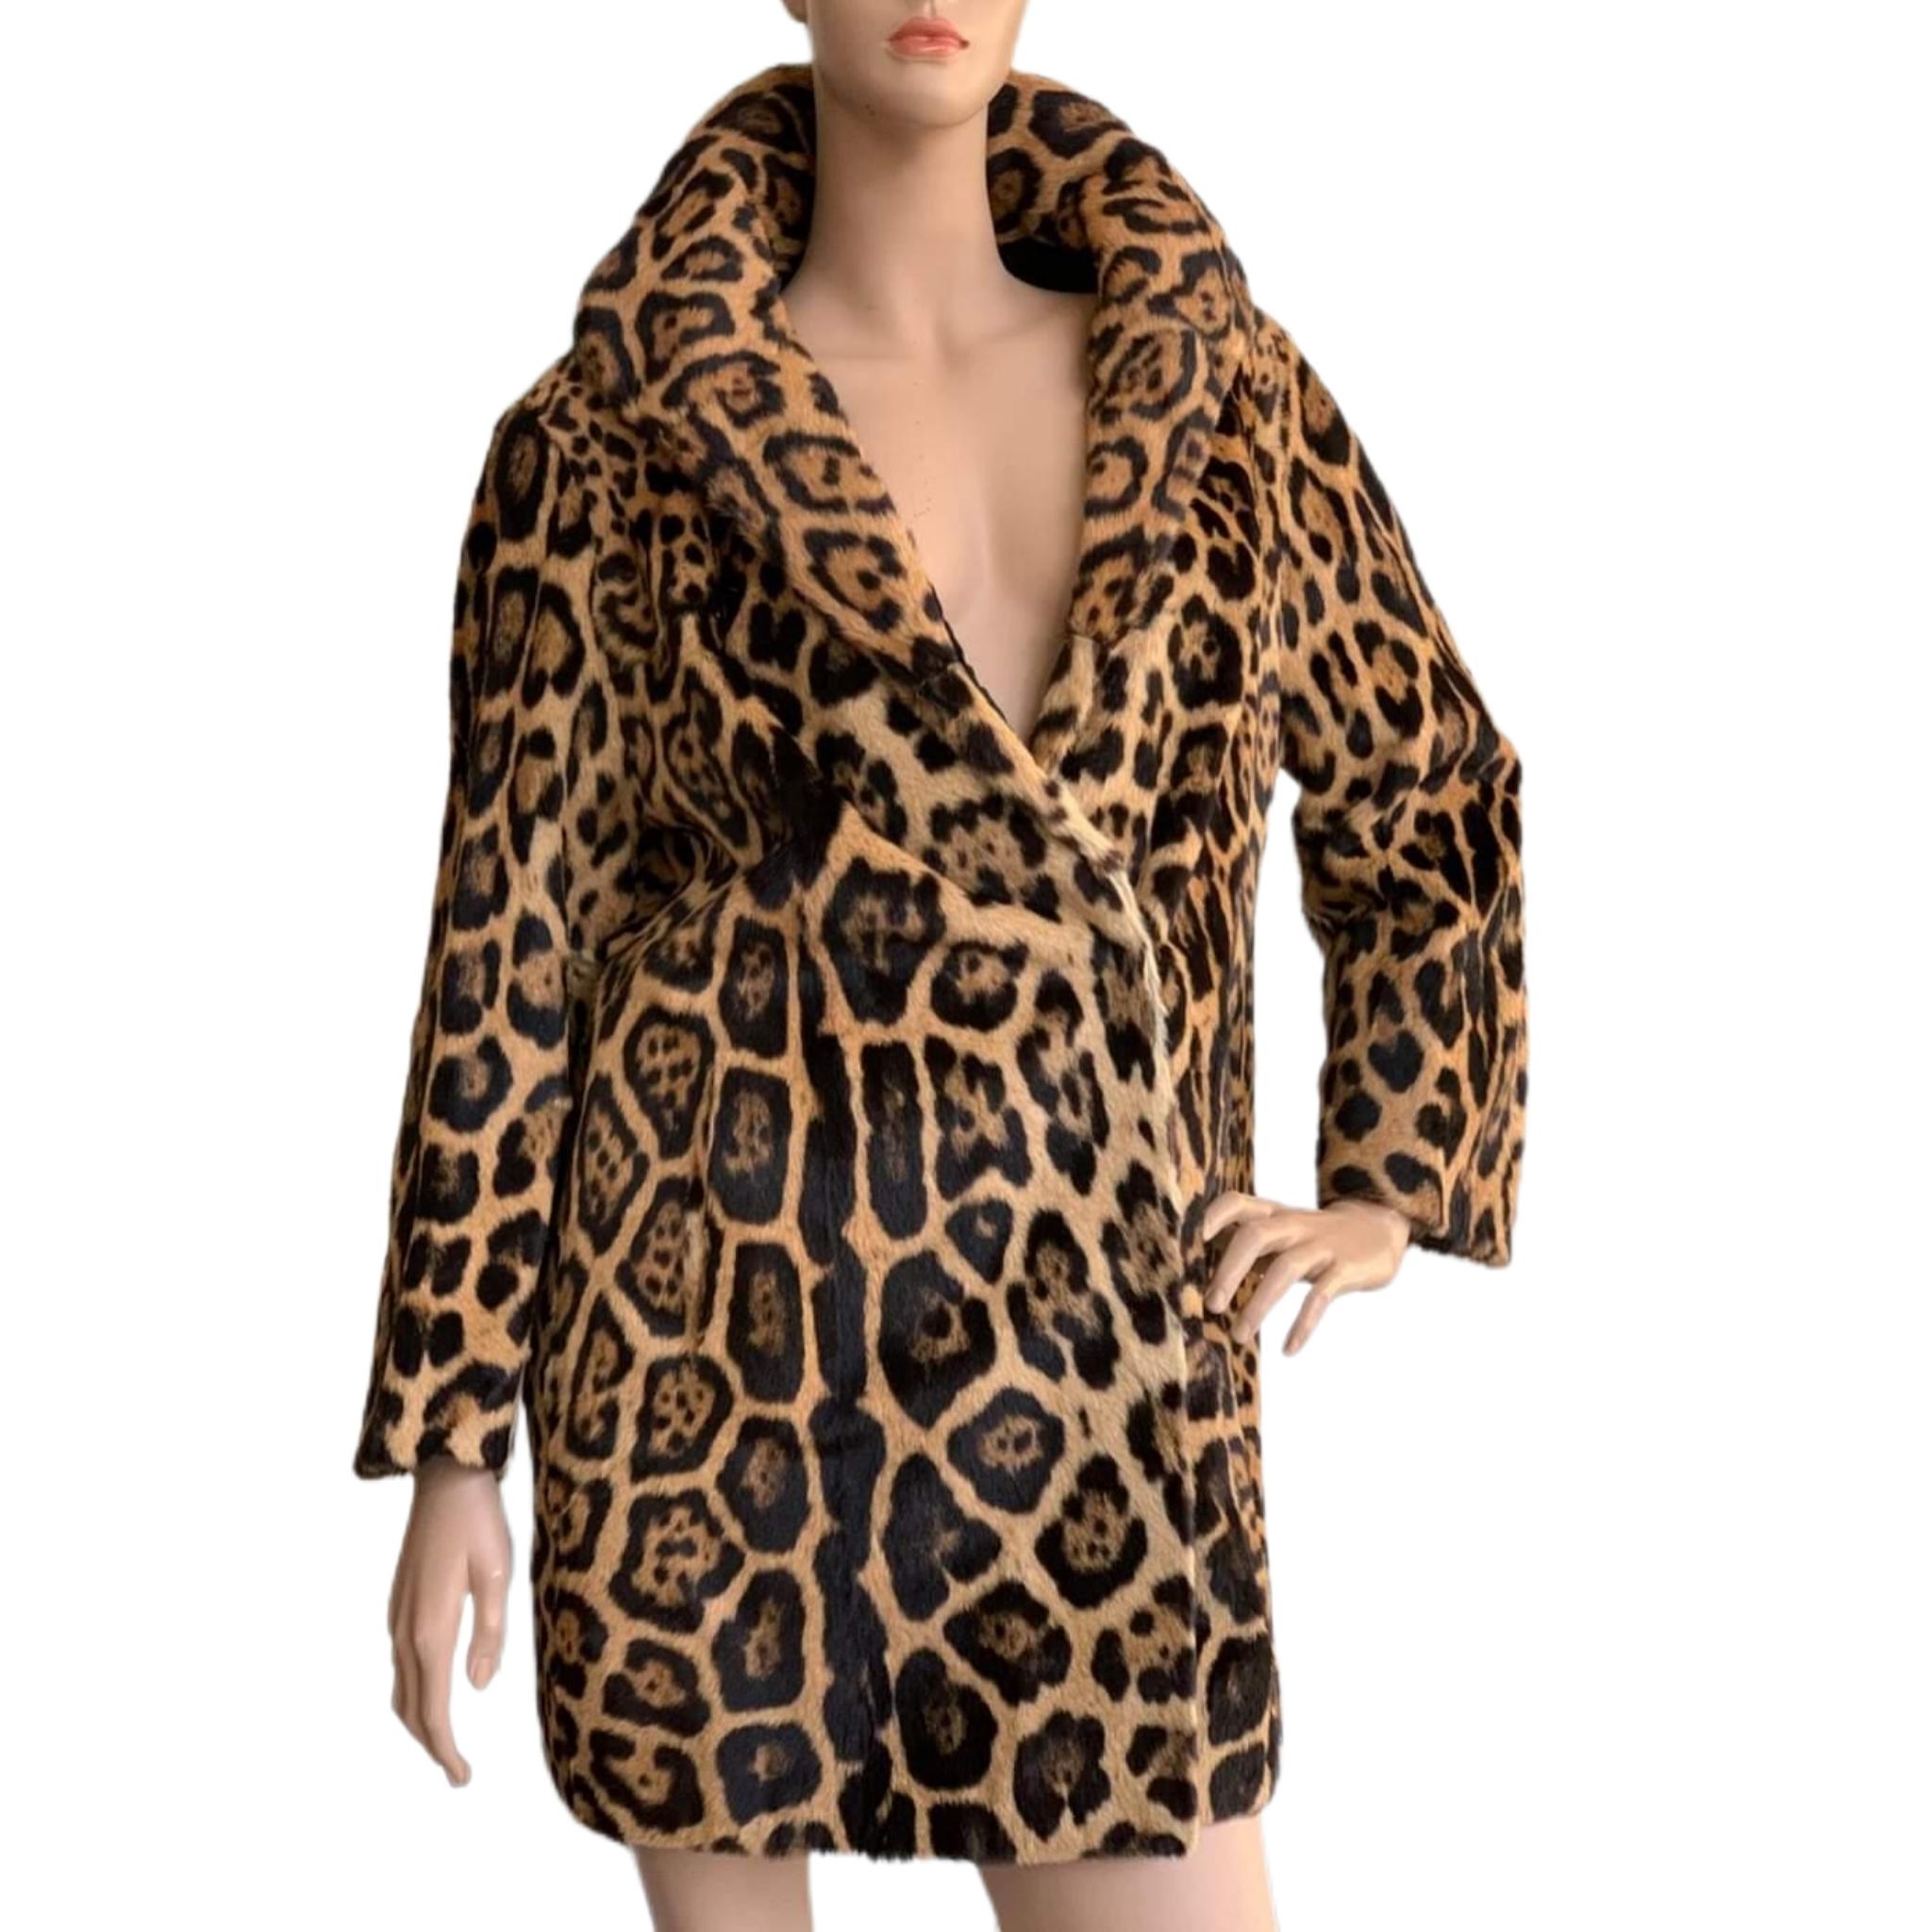 PRODUCT DESCRIPTION:

Vintage Jaguar fur coat size 8 

Condition: 

Closure: Metal clasp

Color: Orange brown and black

Material: Fur

Garment type: Notch coat 

Sleeves: Straight

Pockets: Slit pockets

Collar: Notch

Lining: Shirred Silk